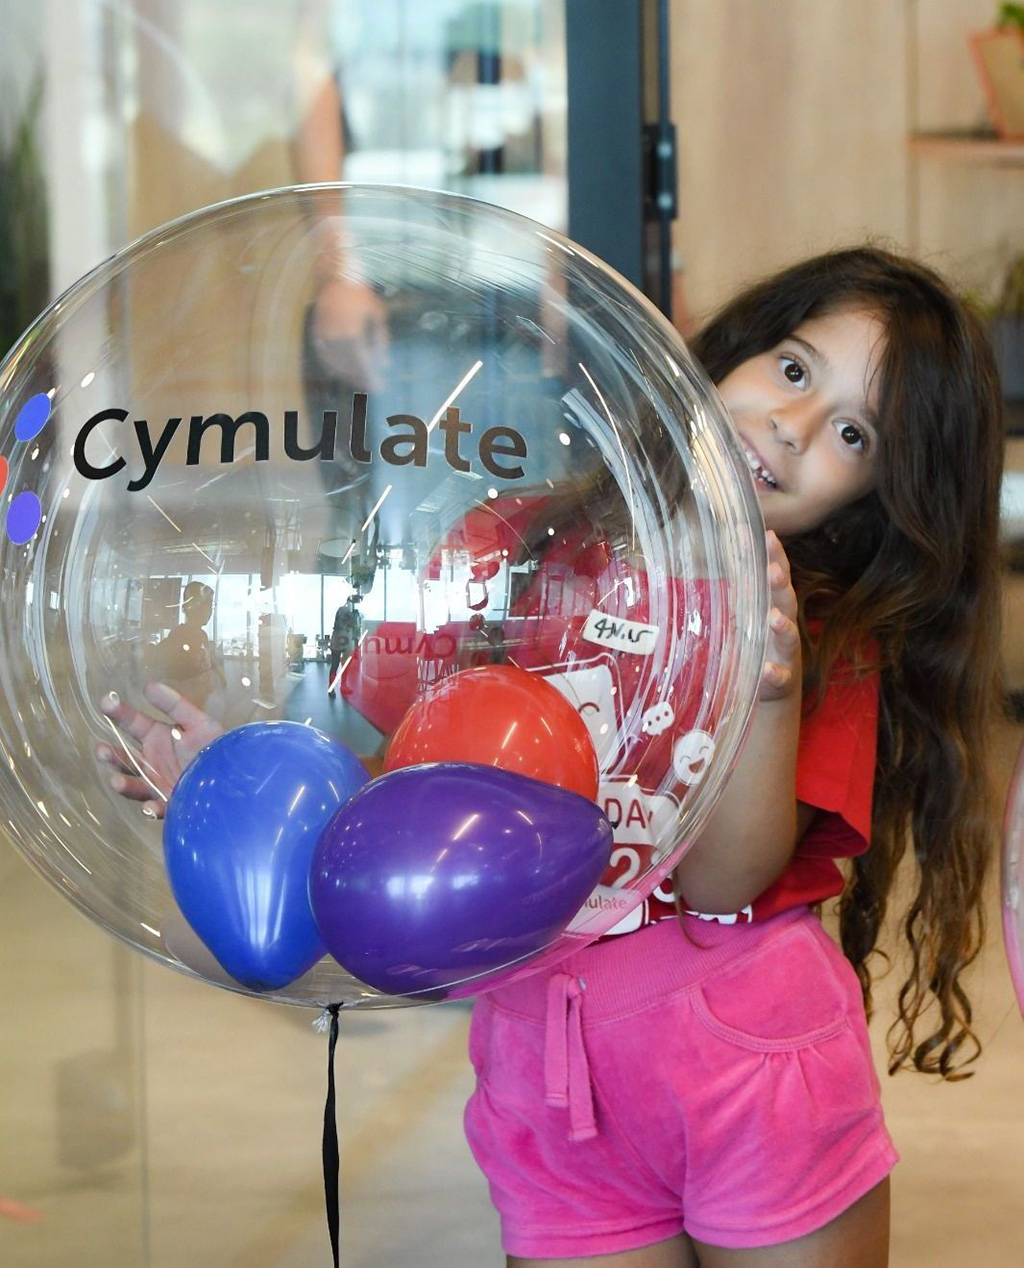 Cymulate - 19